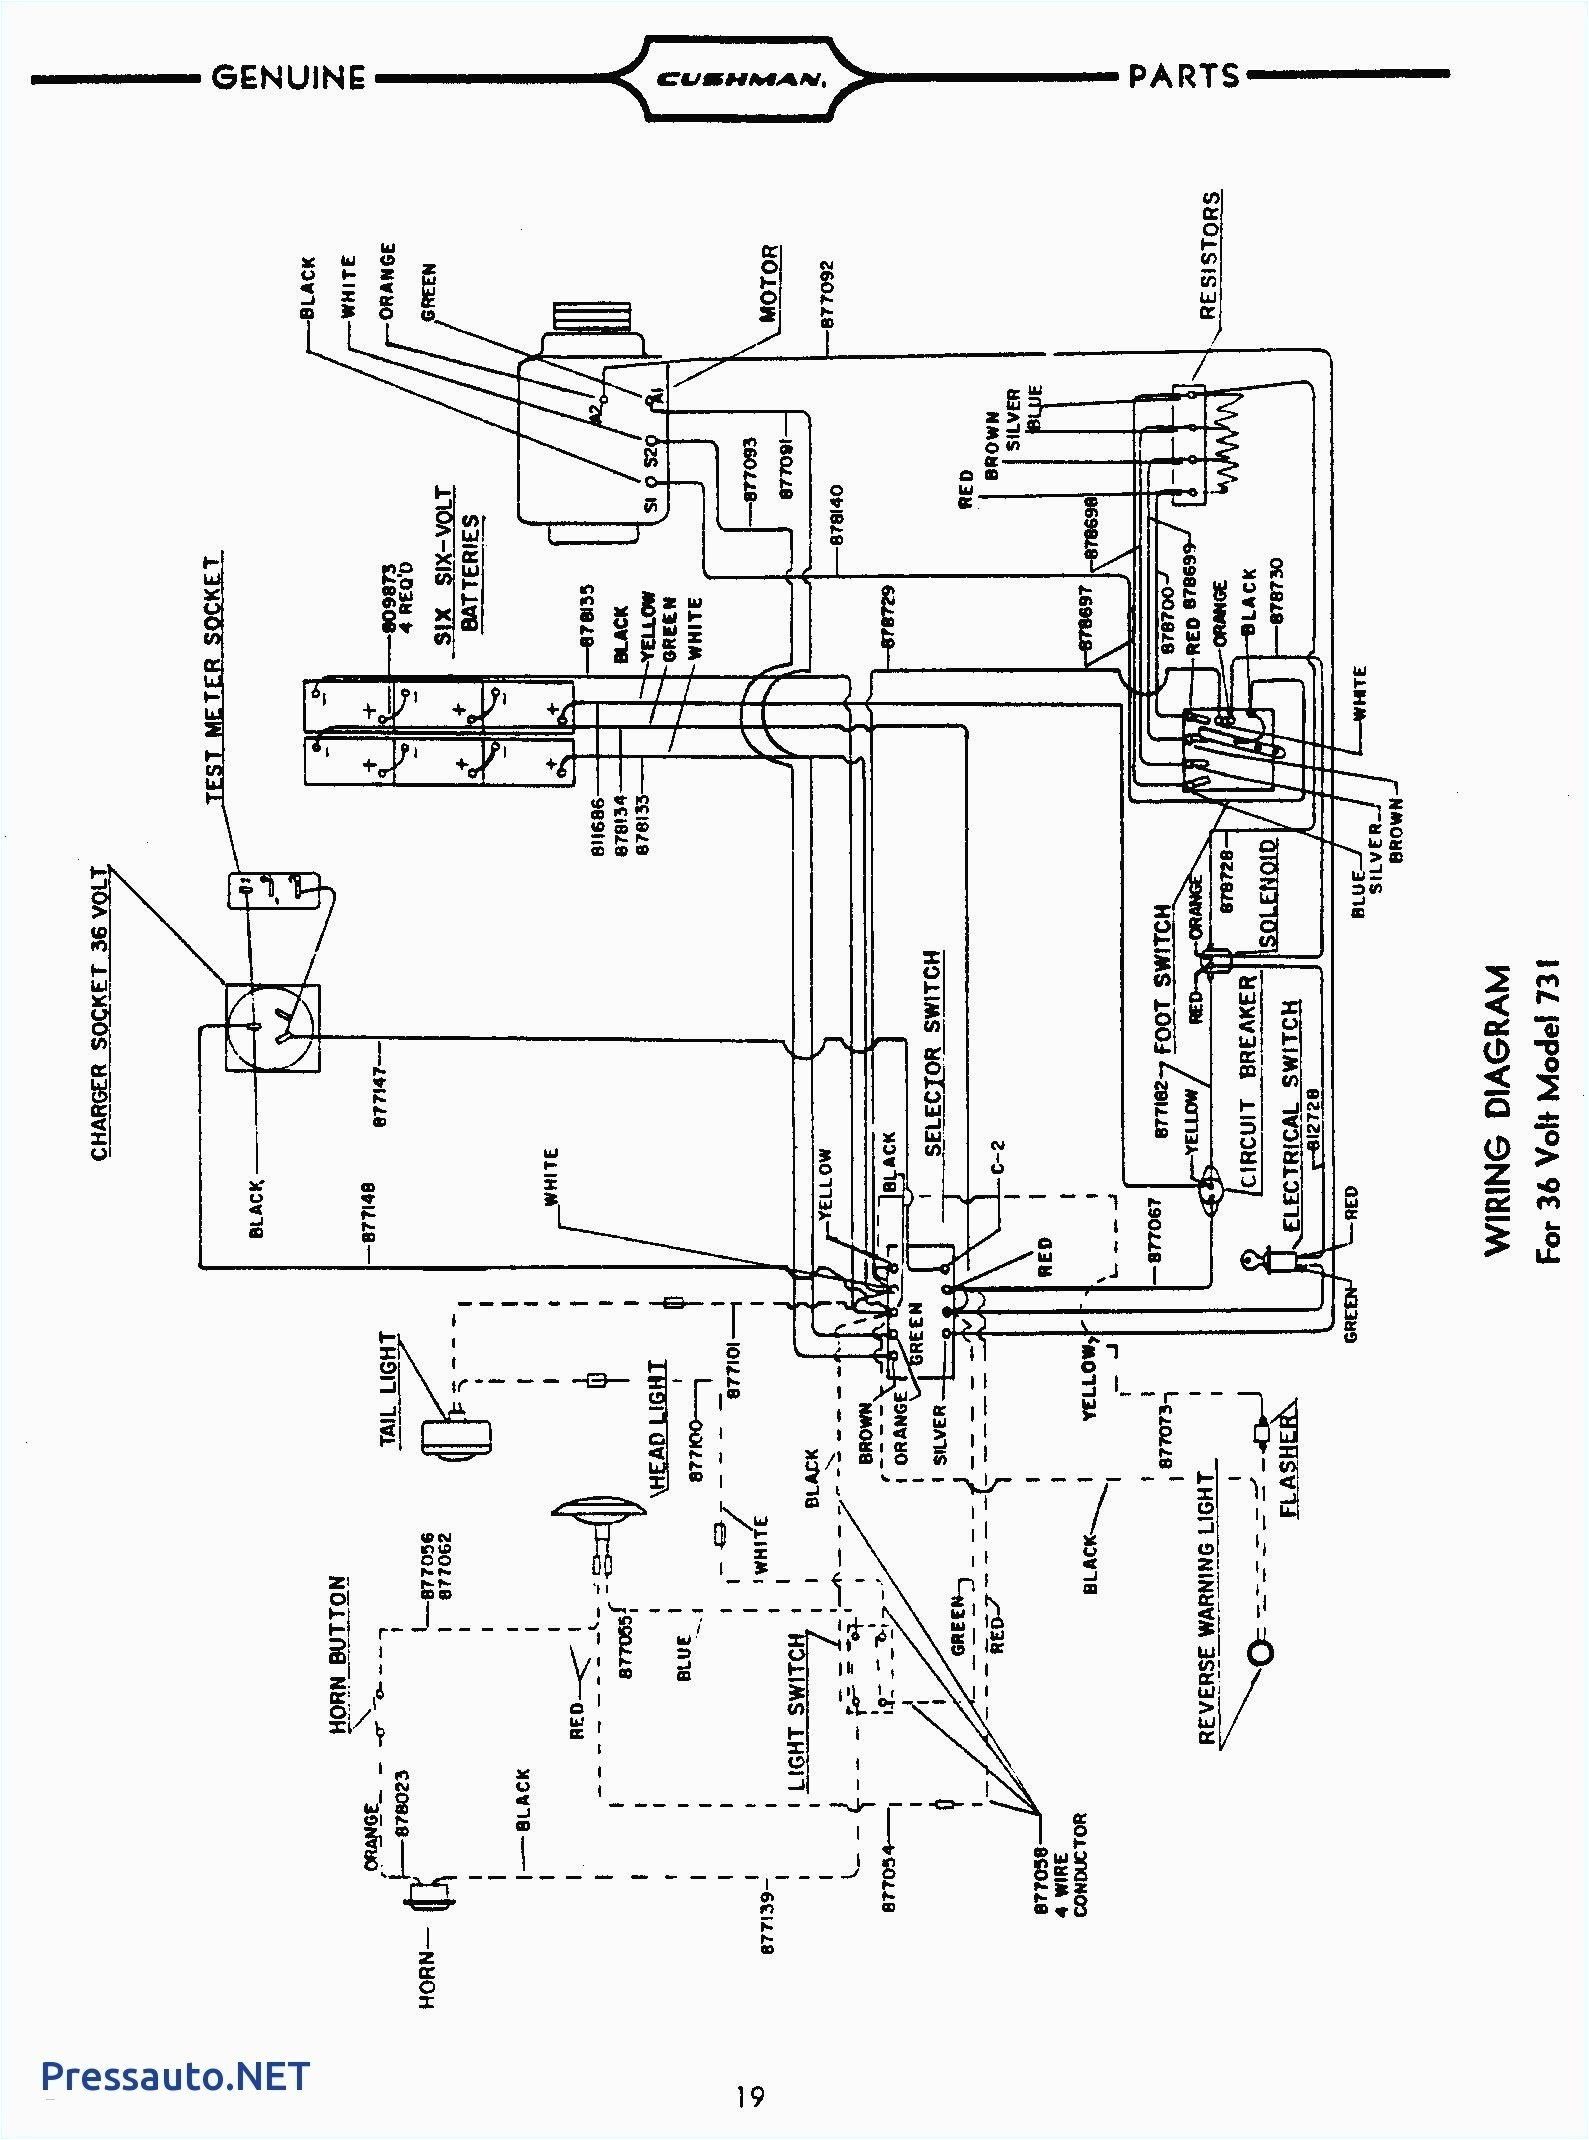 yamaha g14 wiring diagram lovely wiring diagram ez go electric golf cart refrence wiring diagram od